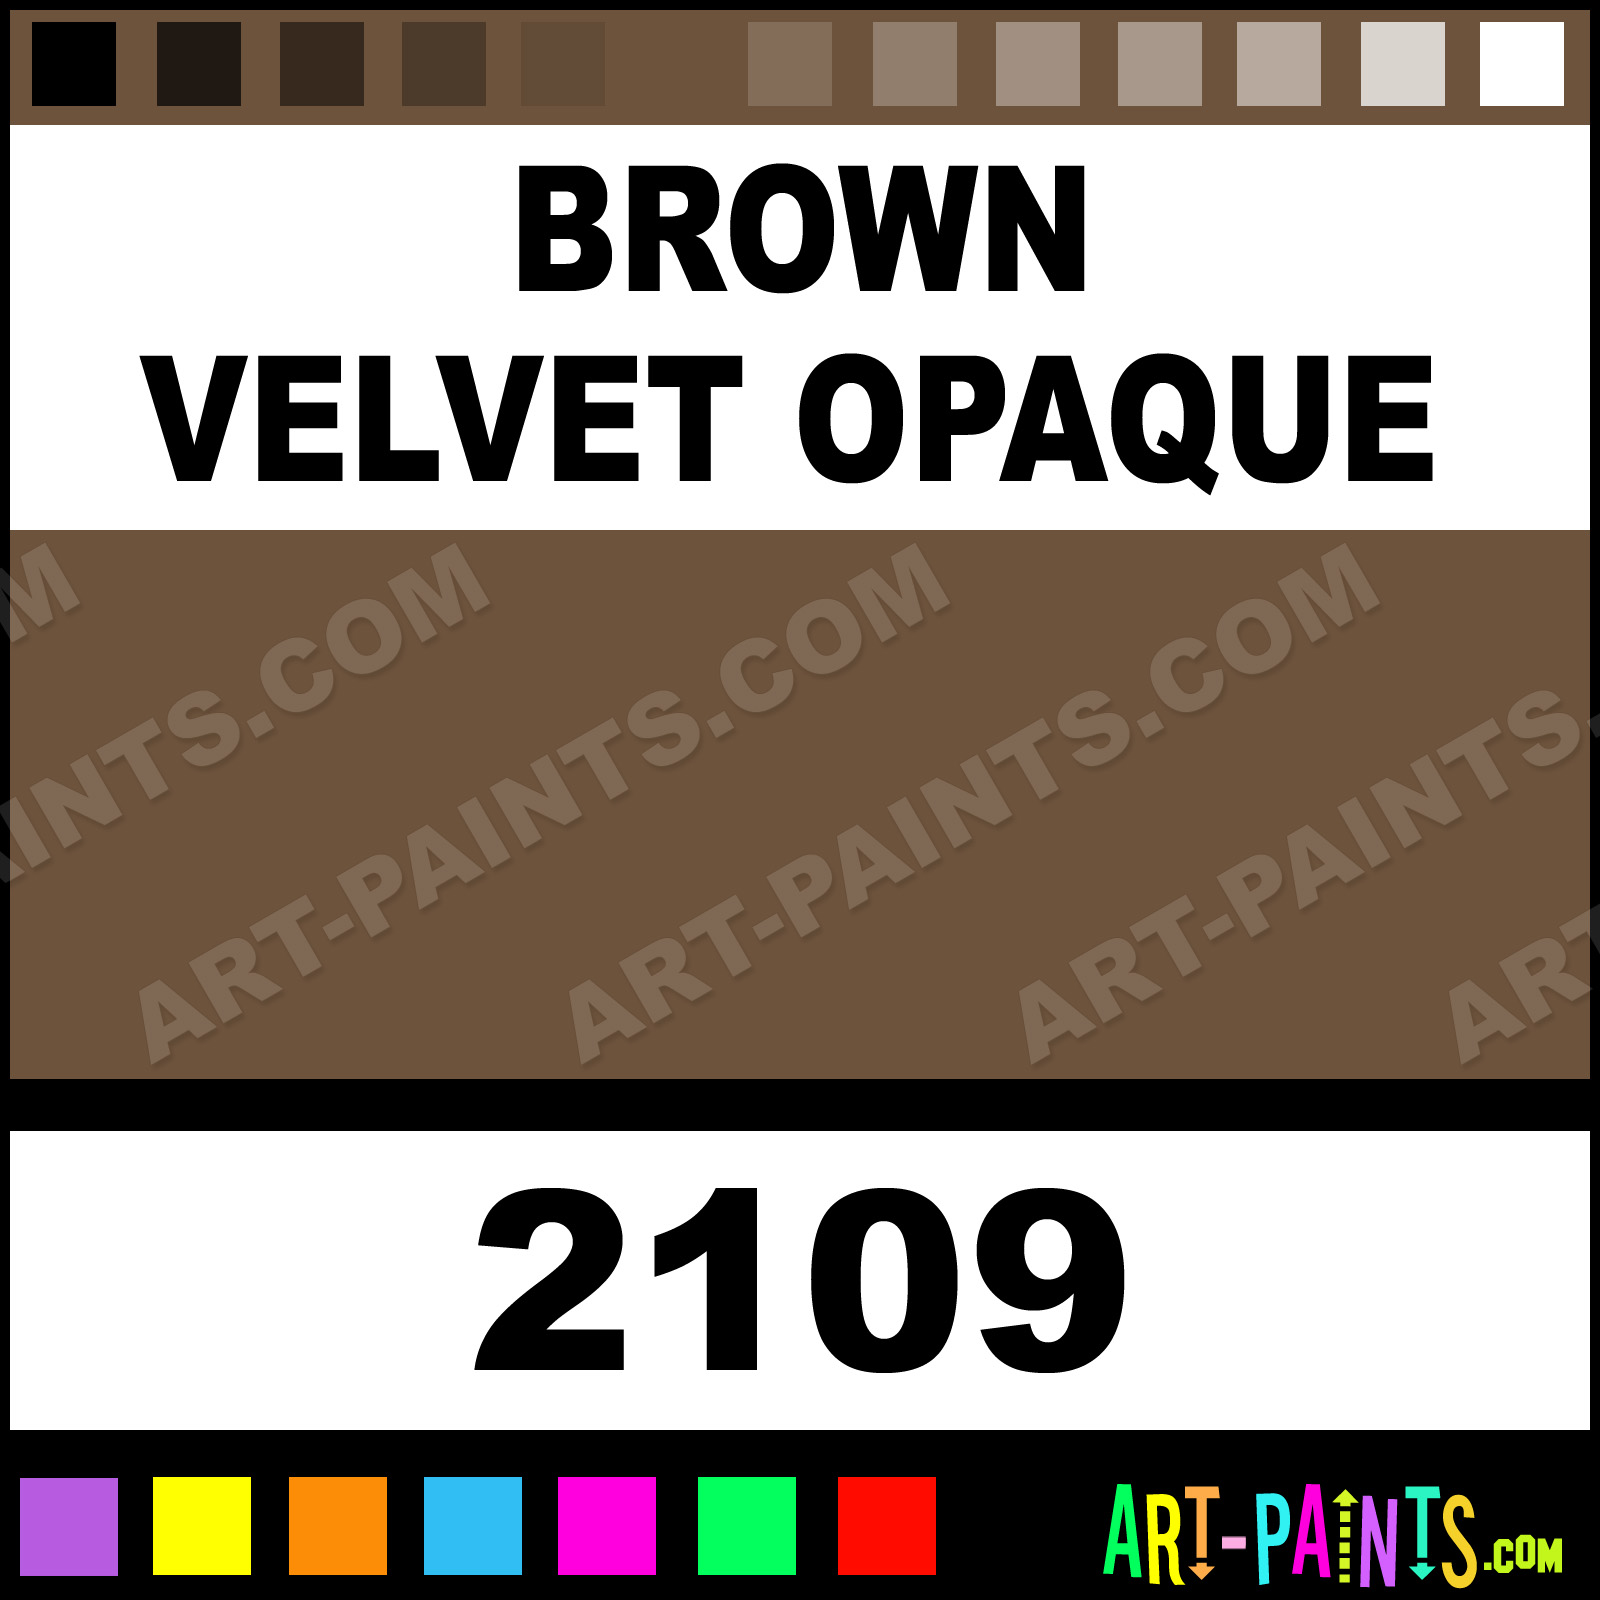 http://www.art-paints.com/Paints/Acrylic/Delta/Brown-Velvet-Opaque/Brown-Velvet-Opaque-xlg.jpg